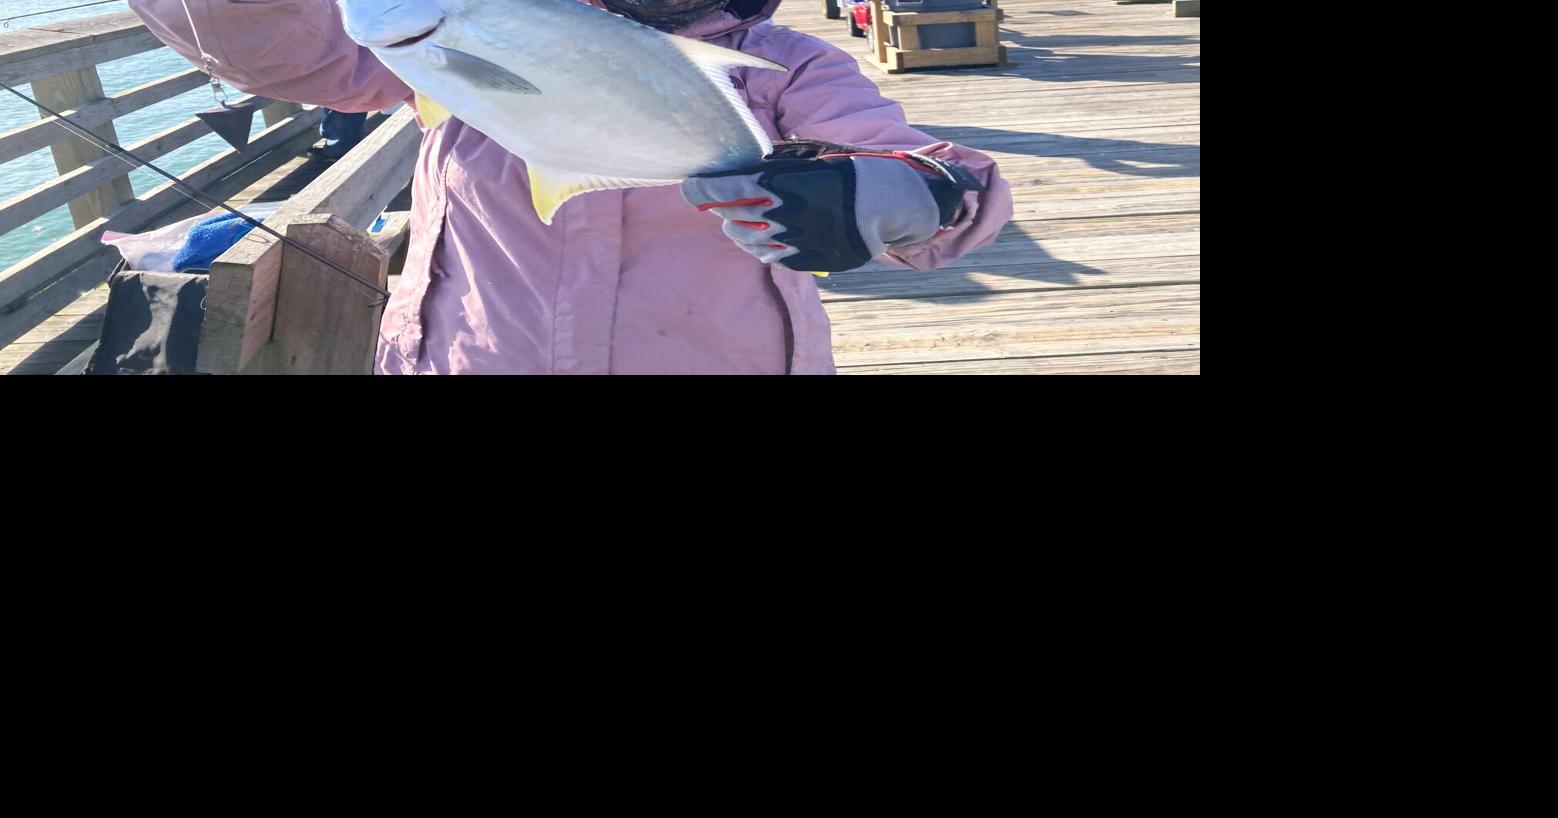 Buy fishing feeder sets Online in Aruba at Low Prices at desertcart